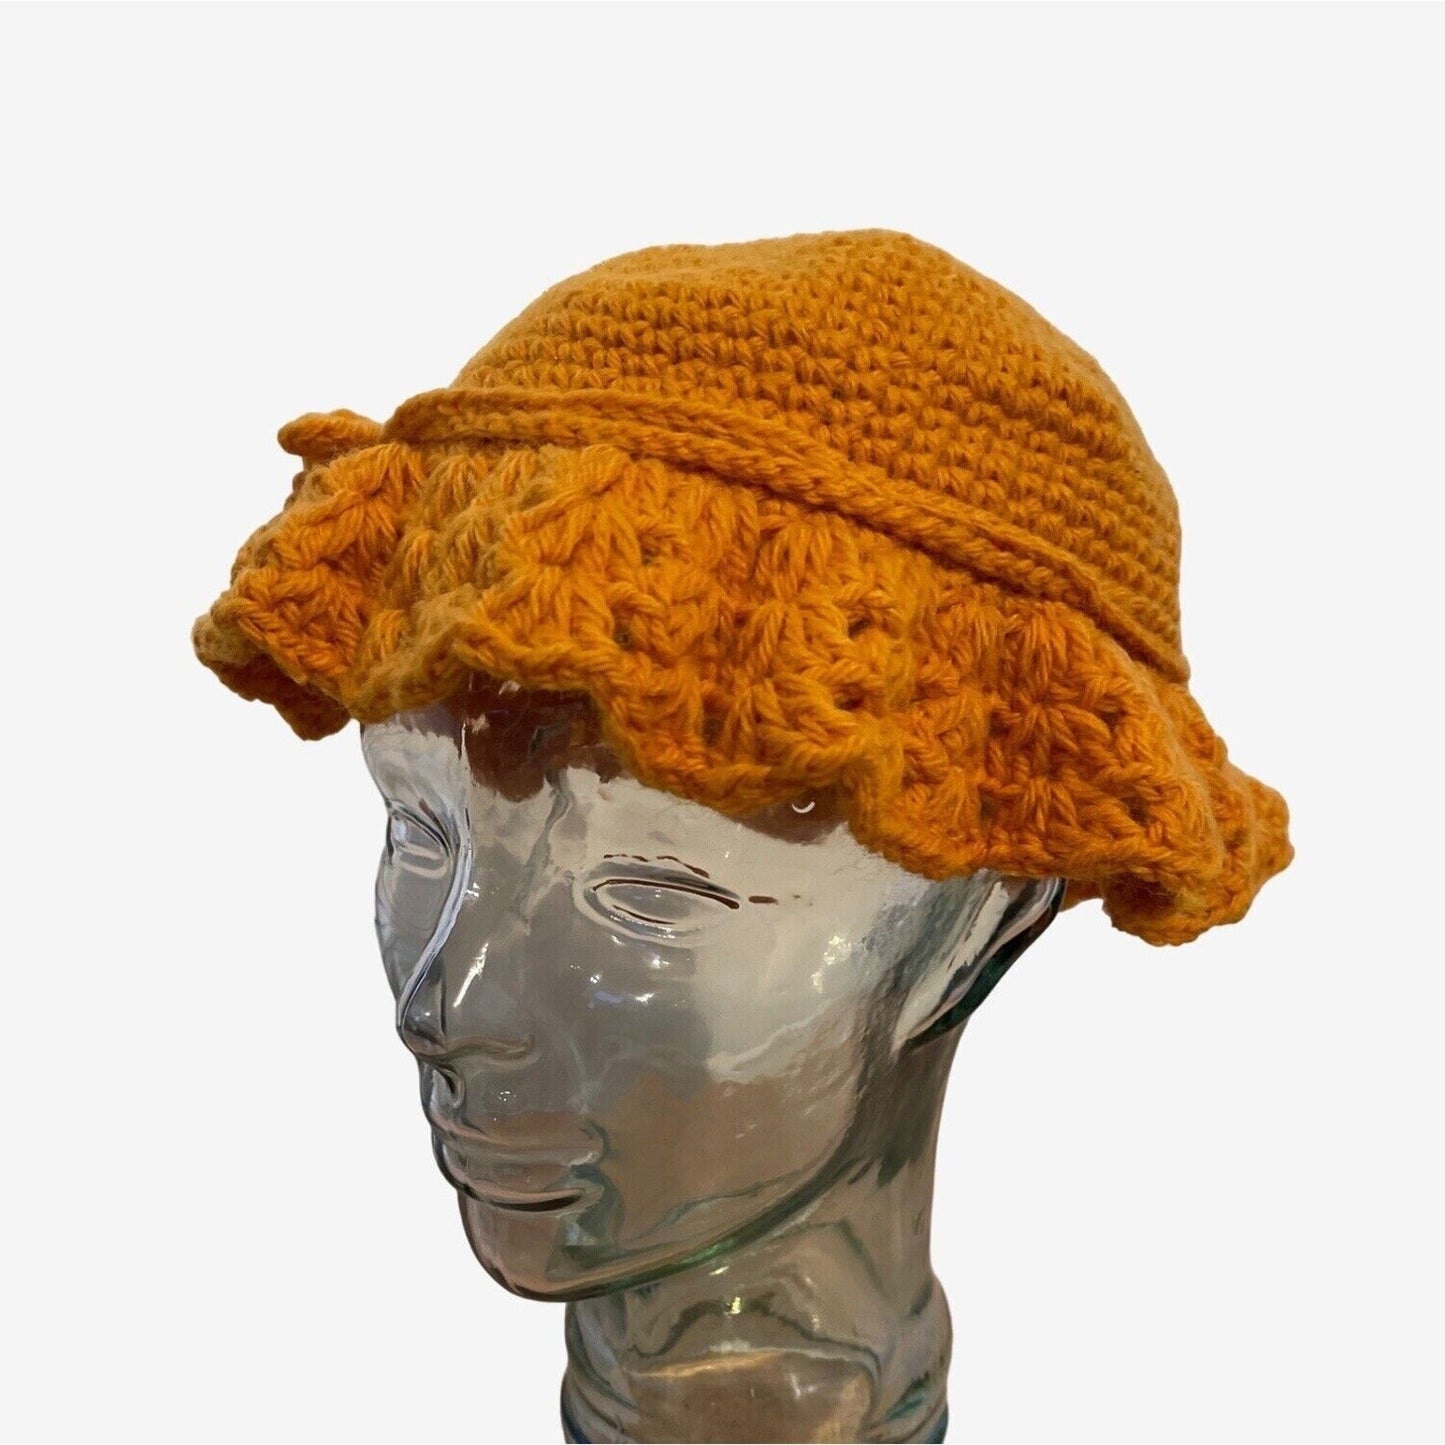 18 inch Sunflower Yellow Crochet Bucket Vintage Hat Granny Core 1960s Homemade